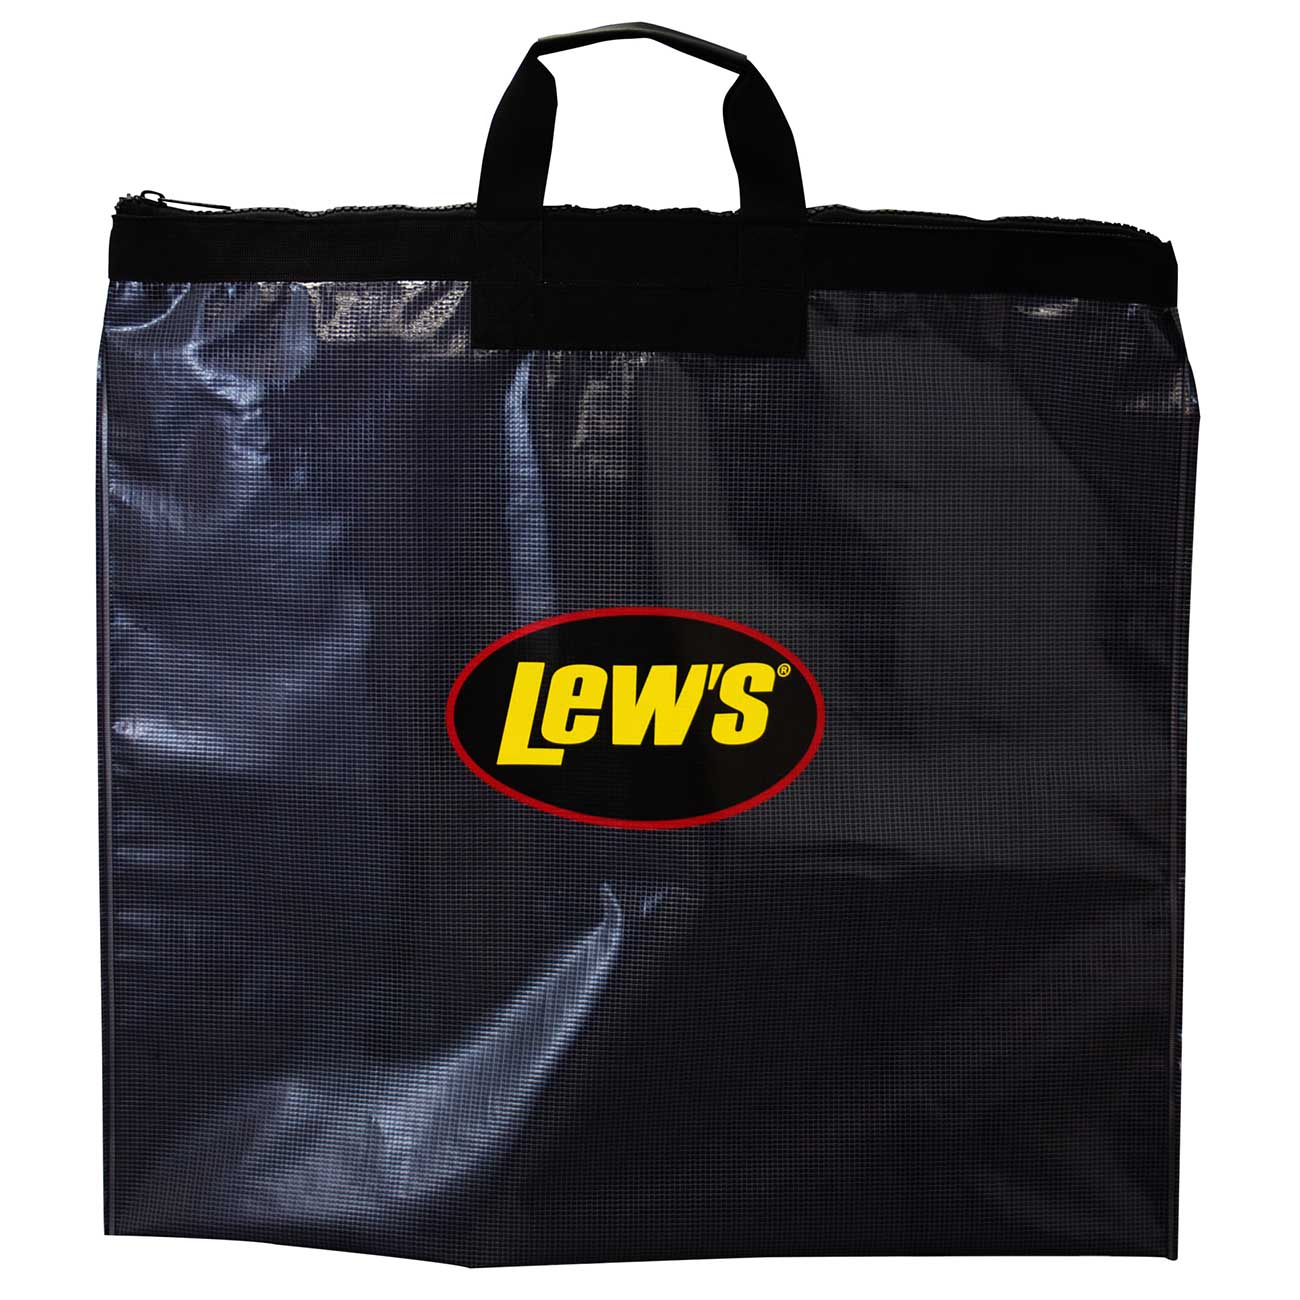 Lews Tournament Weigh-In Bag - Black